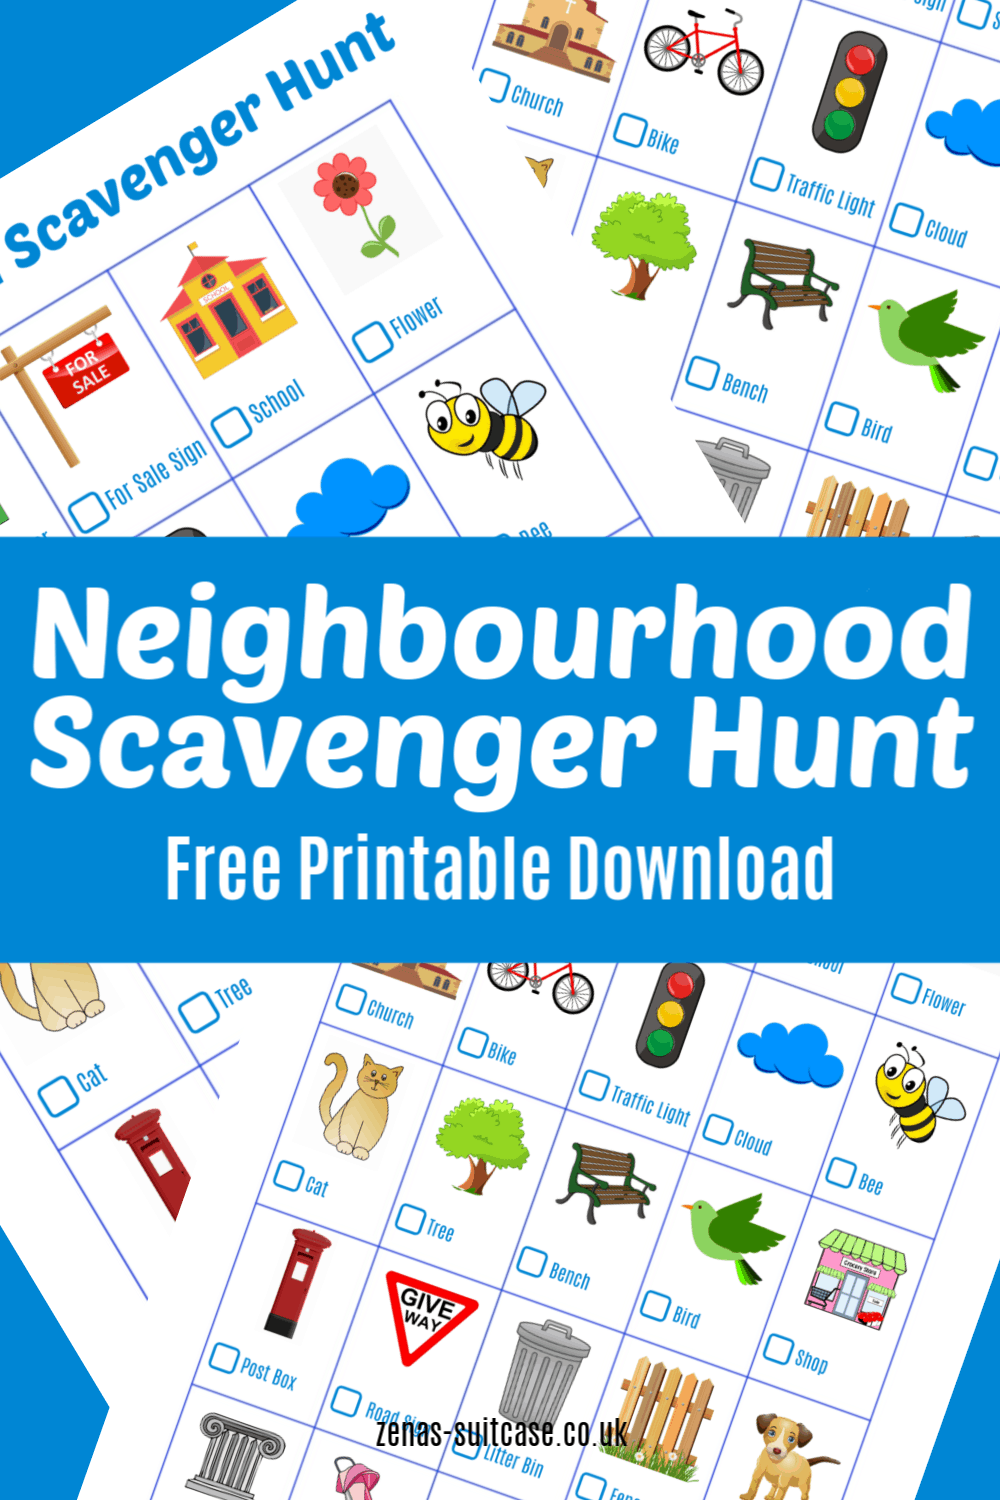 Neighbourhood Scavenger Hunt - Free printable download for you next family walk